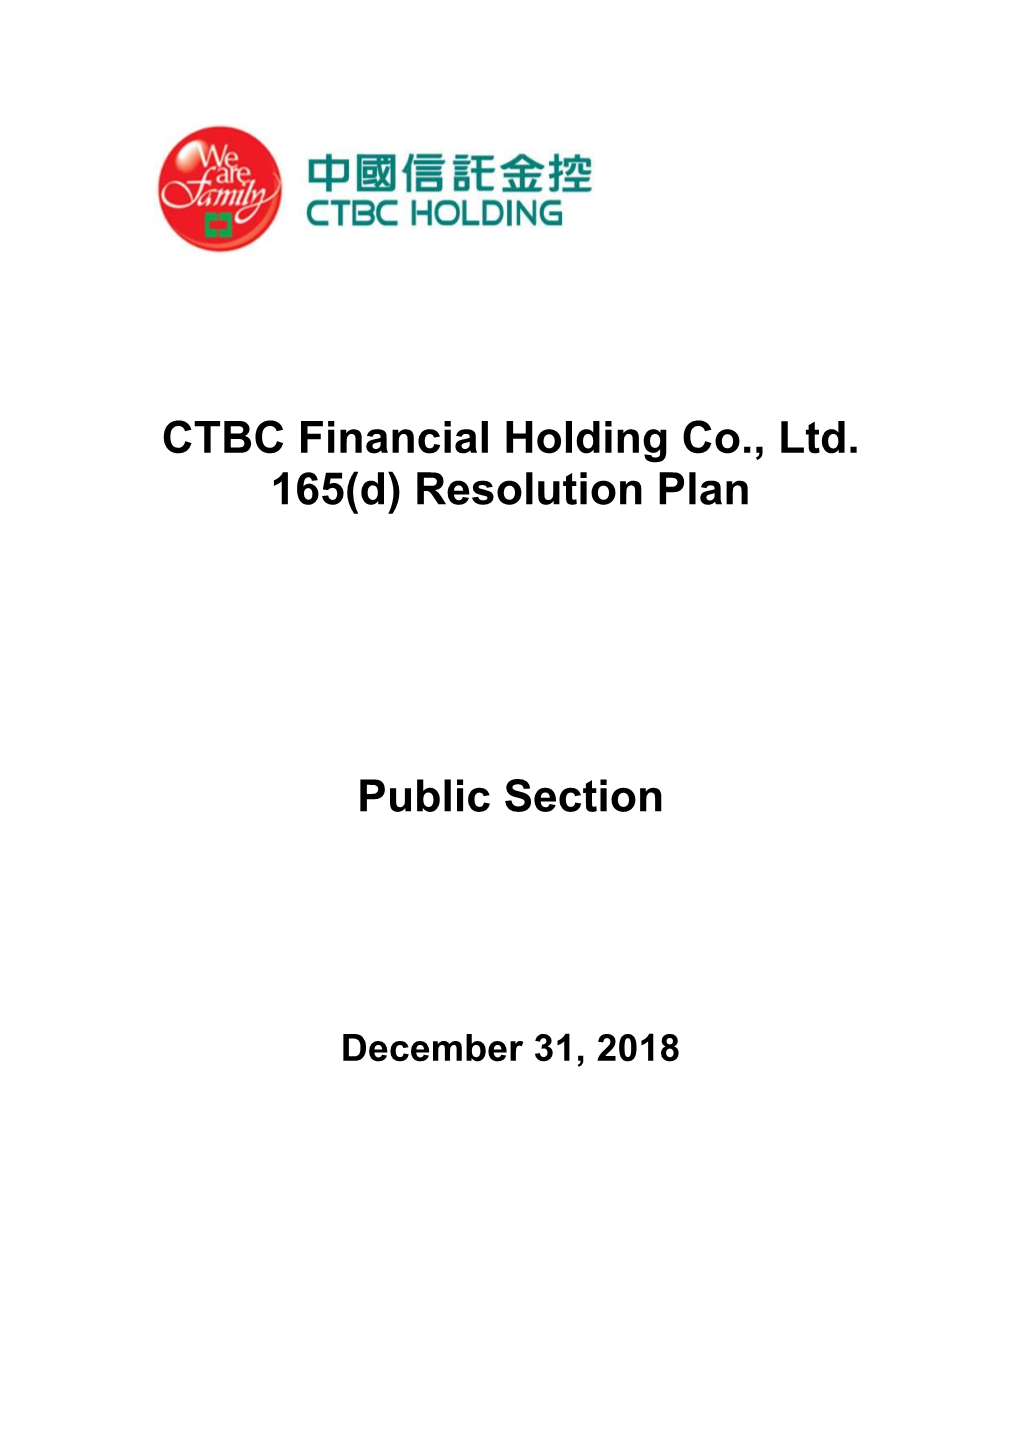 CTBC Financial Holding Co., Ltd. 165(D) Resolution Plan